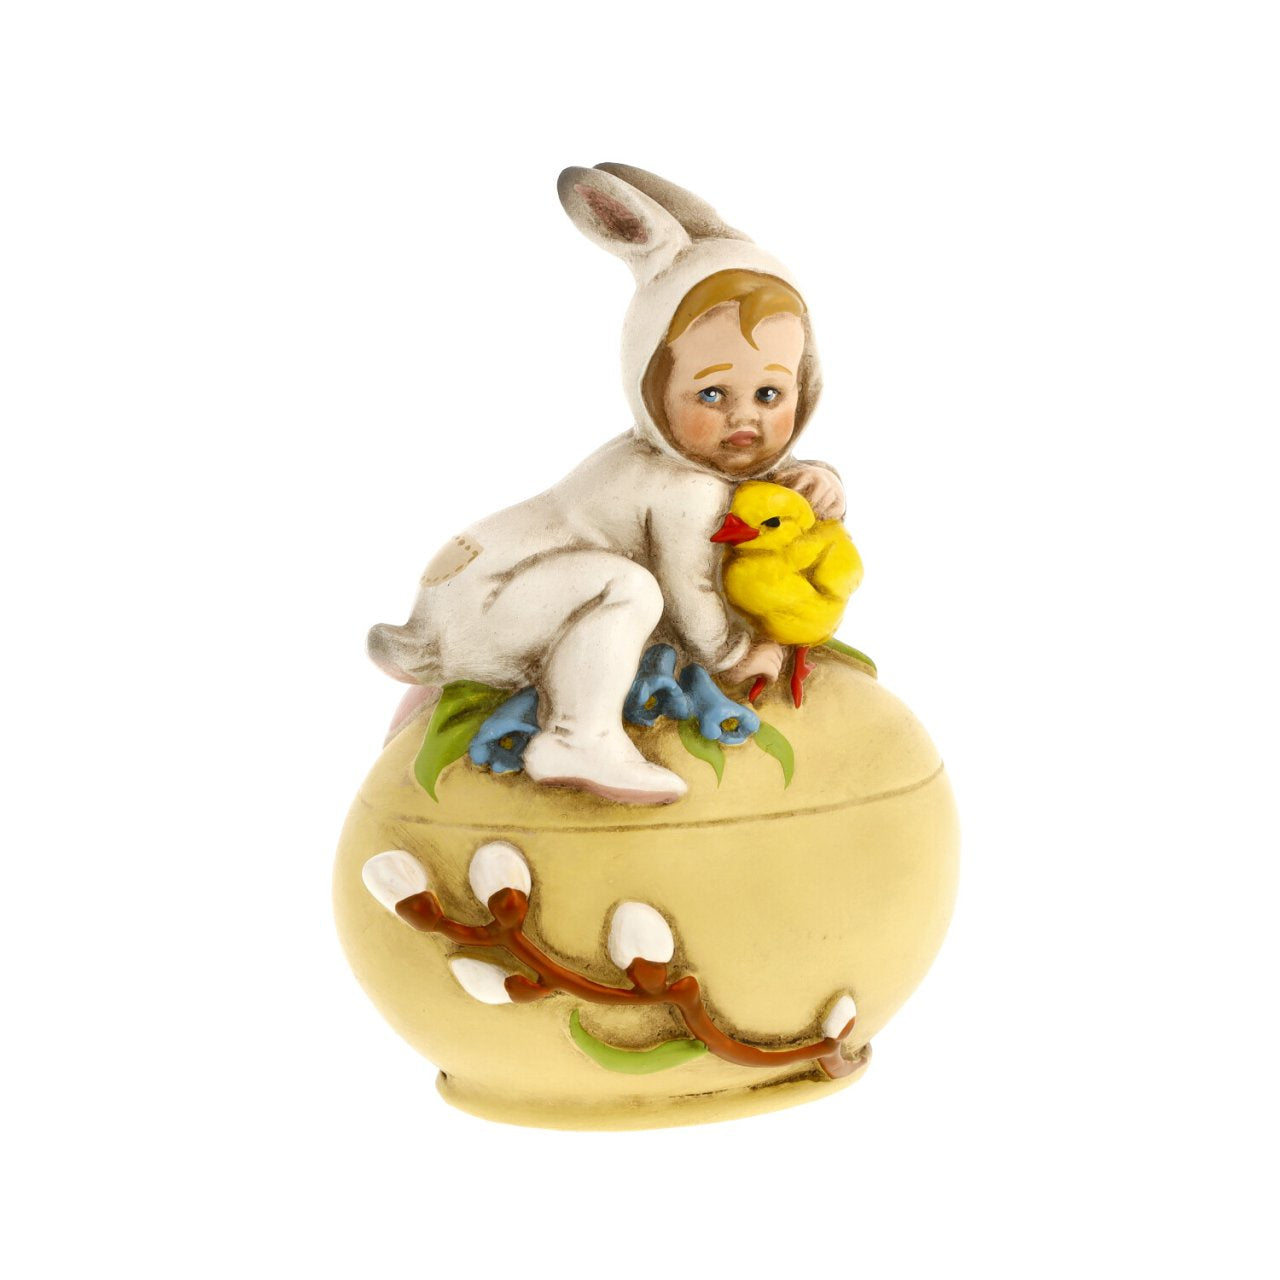 Child as Bunny on an Egg by Marolin